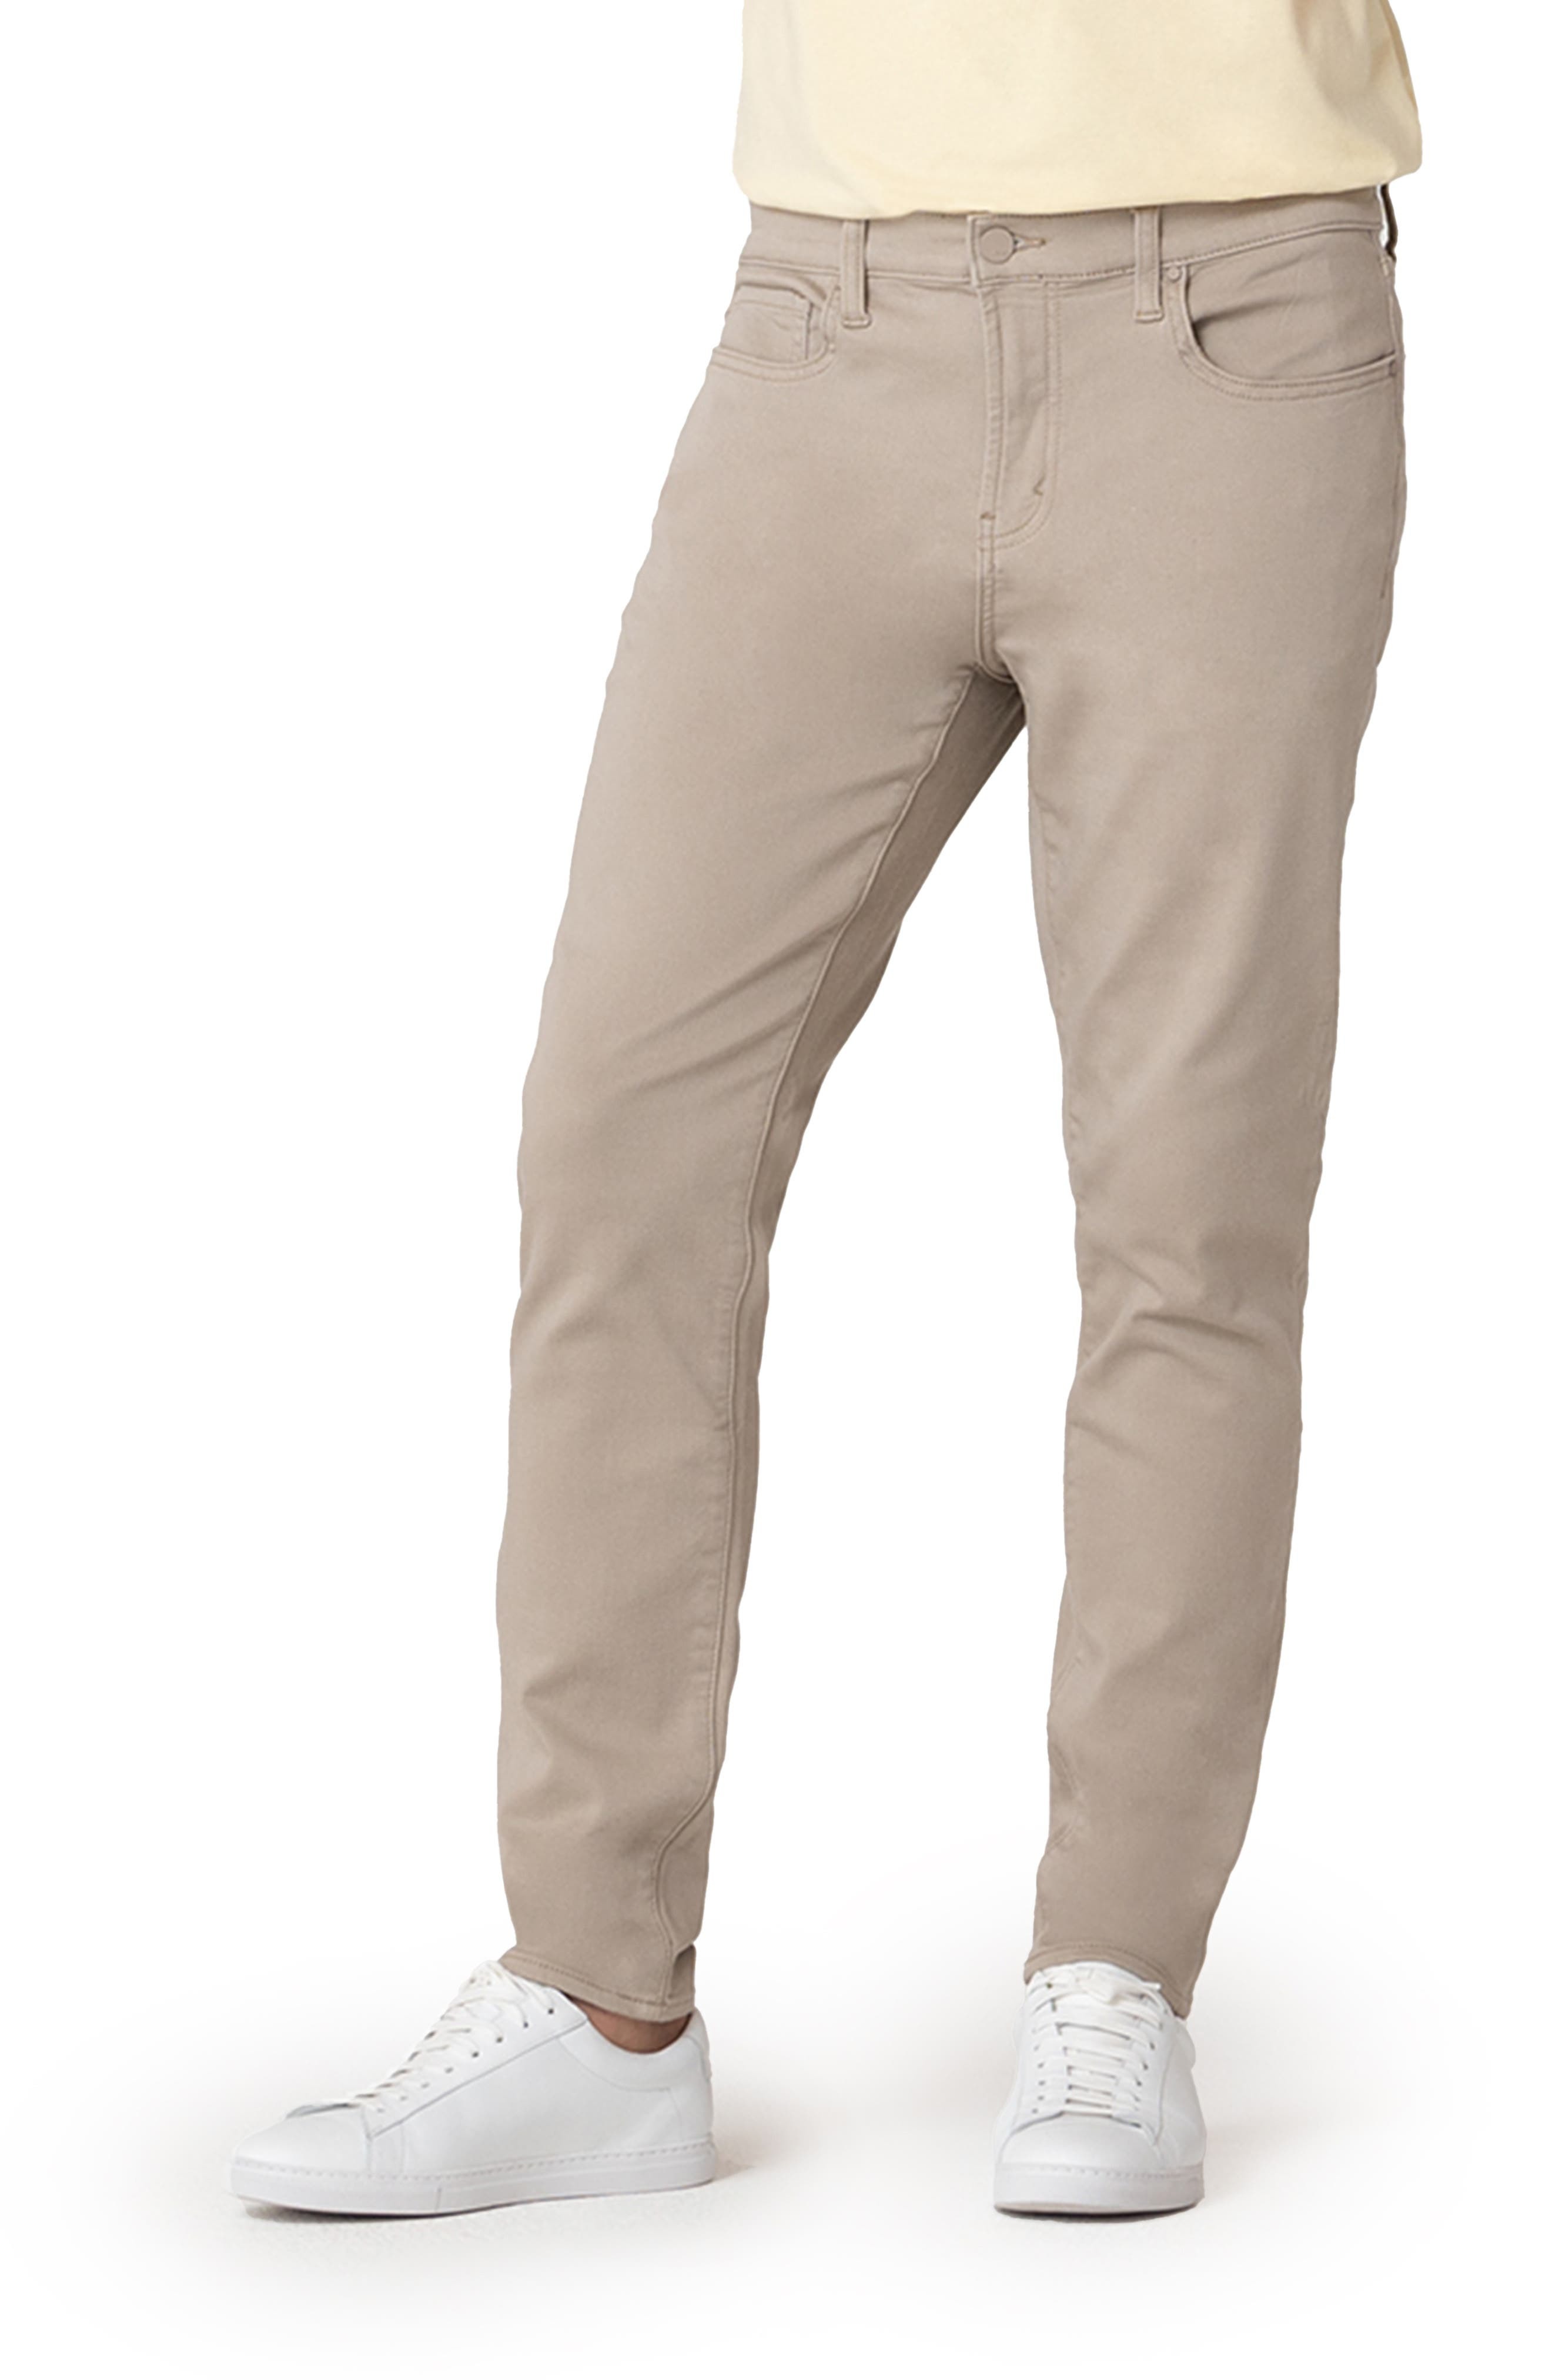 Swet Tailor Duo Slim Fit Pants, $129 | Nordstrom | Lookastic